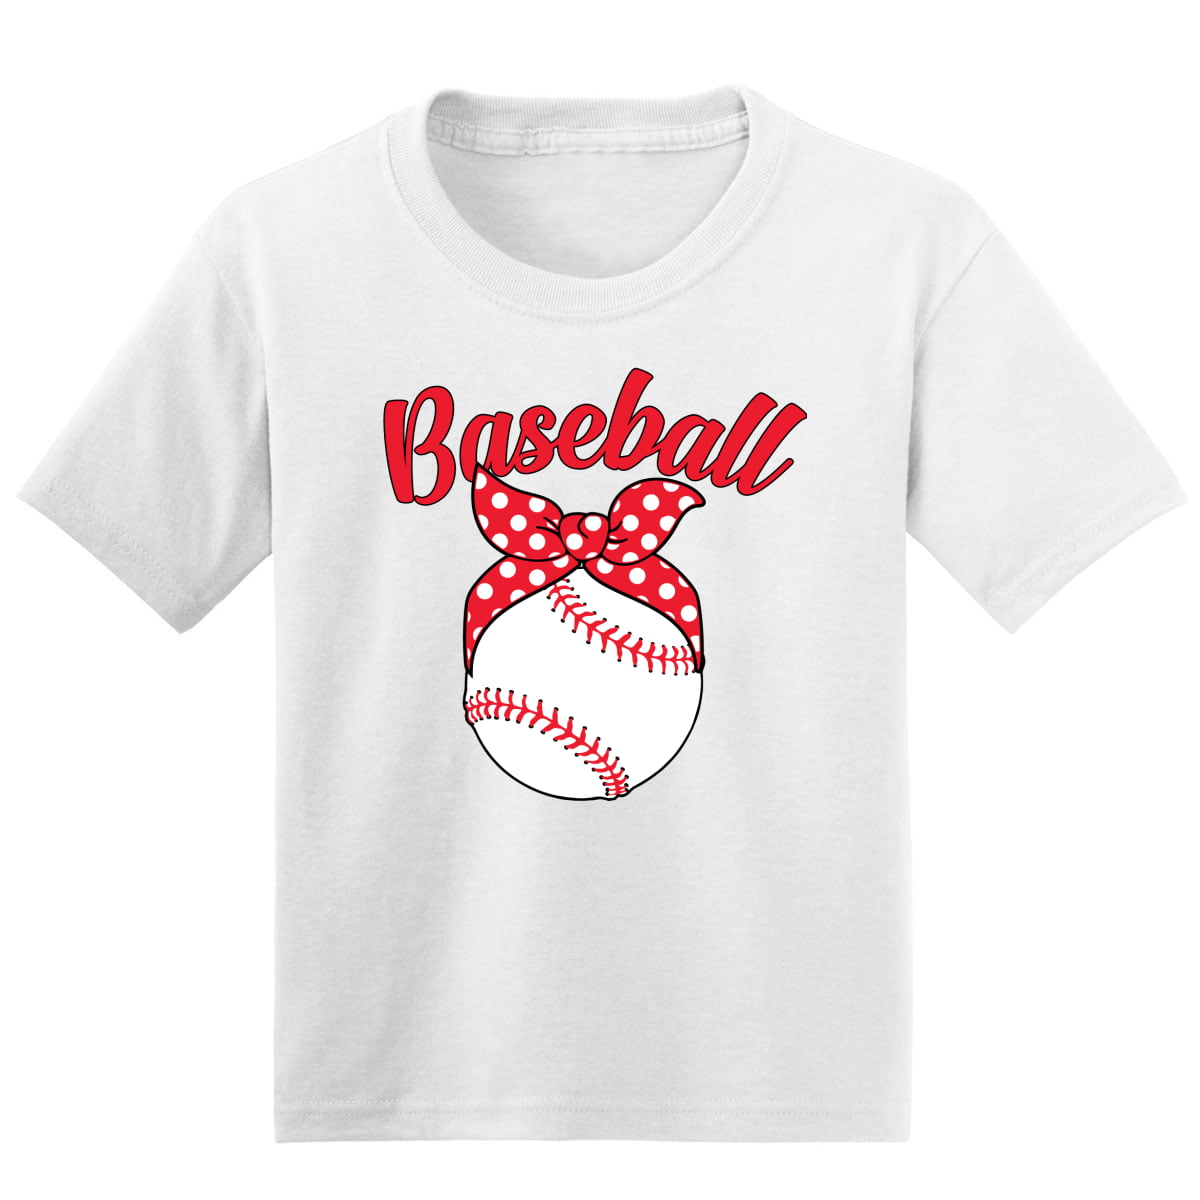 Wild Bobby, Cute Baseball Ribbon Gift Sports Girls Graphic Youth T-Shirt, White, Medium, Girl's